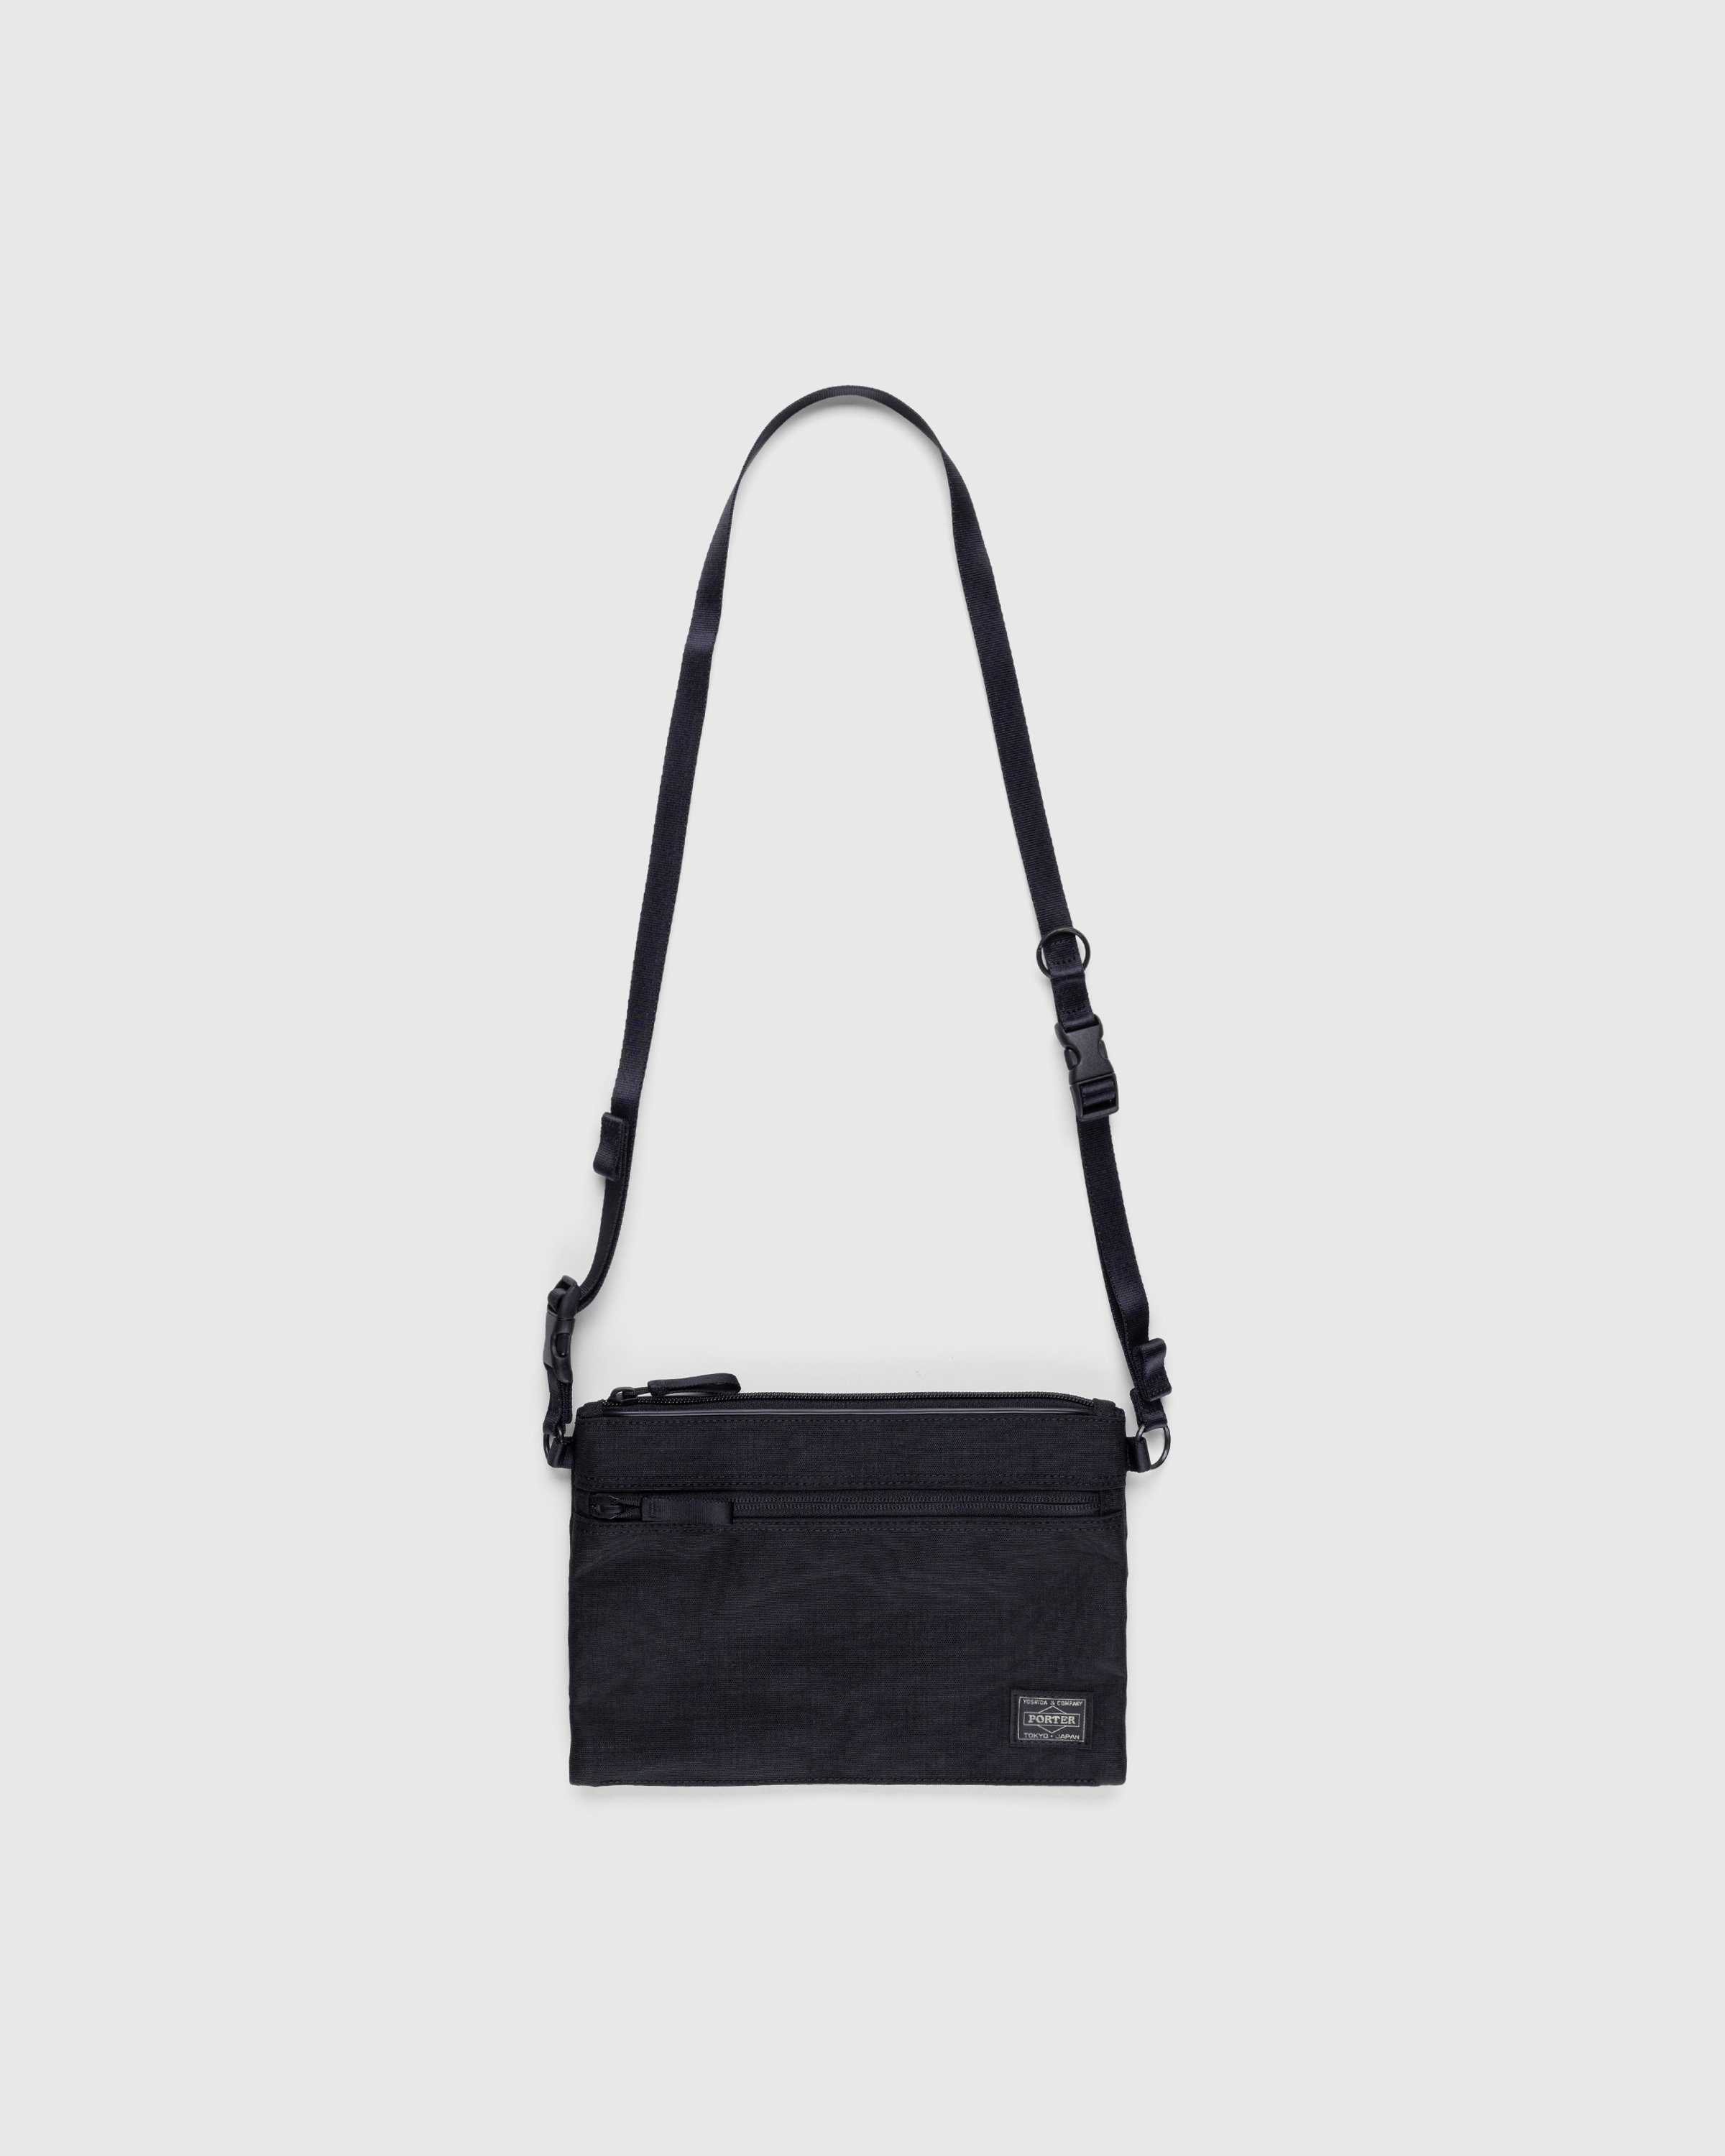 Porter-Yoshida & Co. - Sacoche Hybrid Shoulder Bag Black - Accessories - Black - Image 1